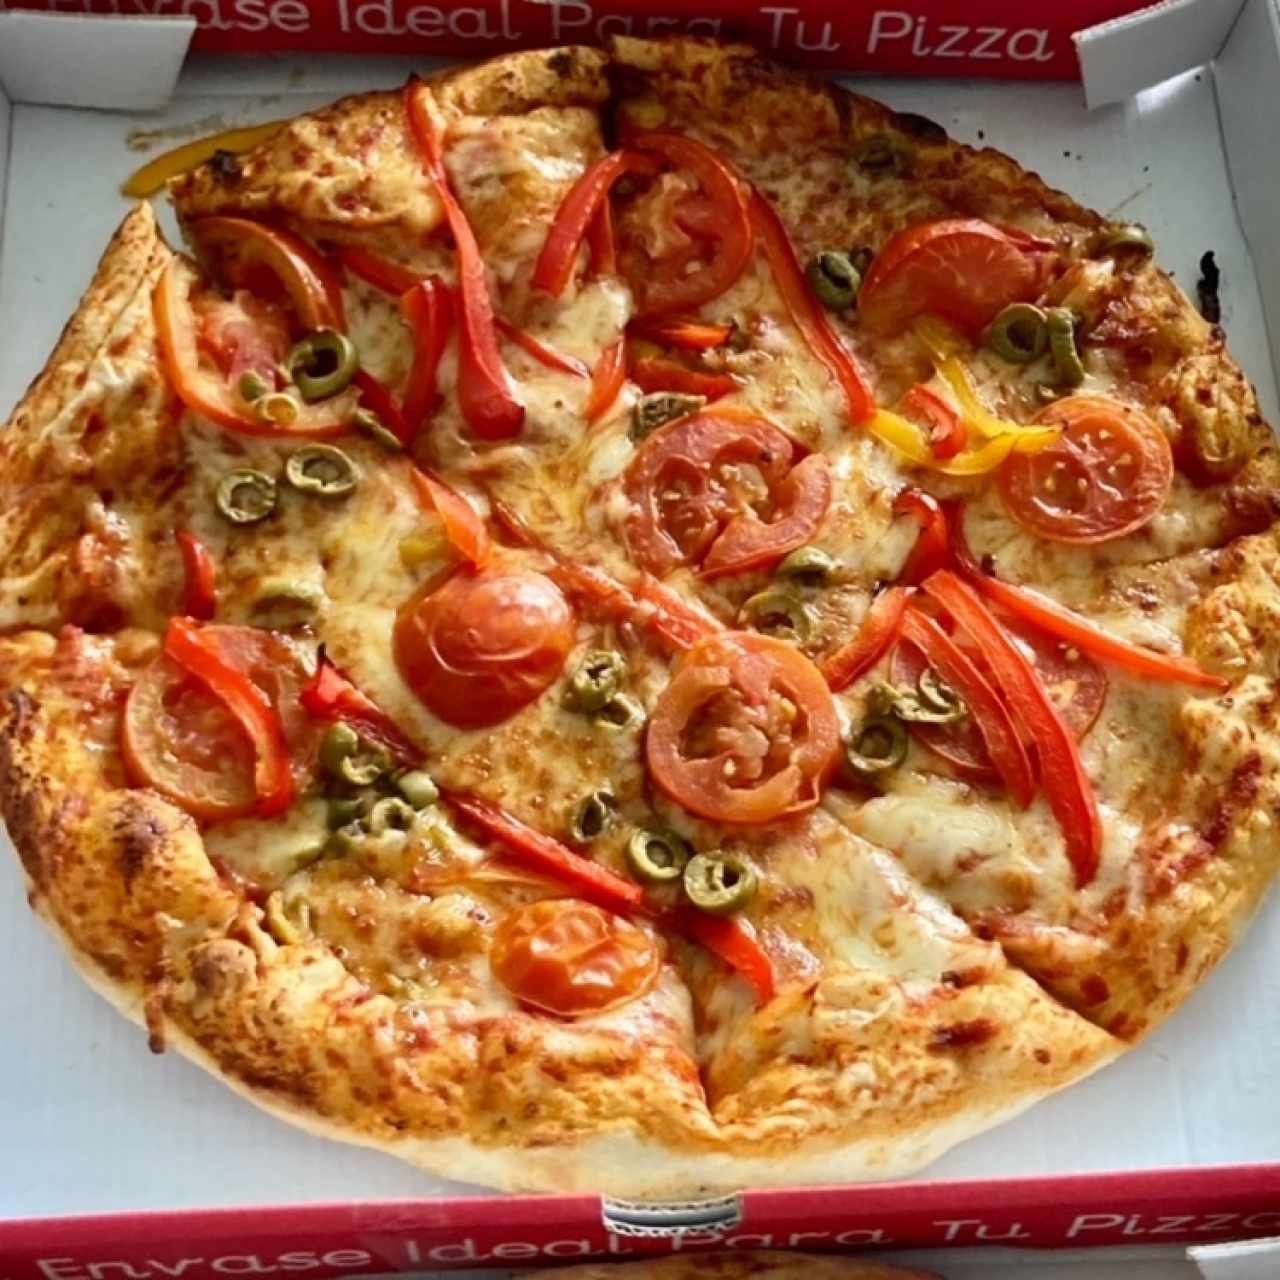 Pizzas - Pizza con Vegetales